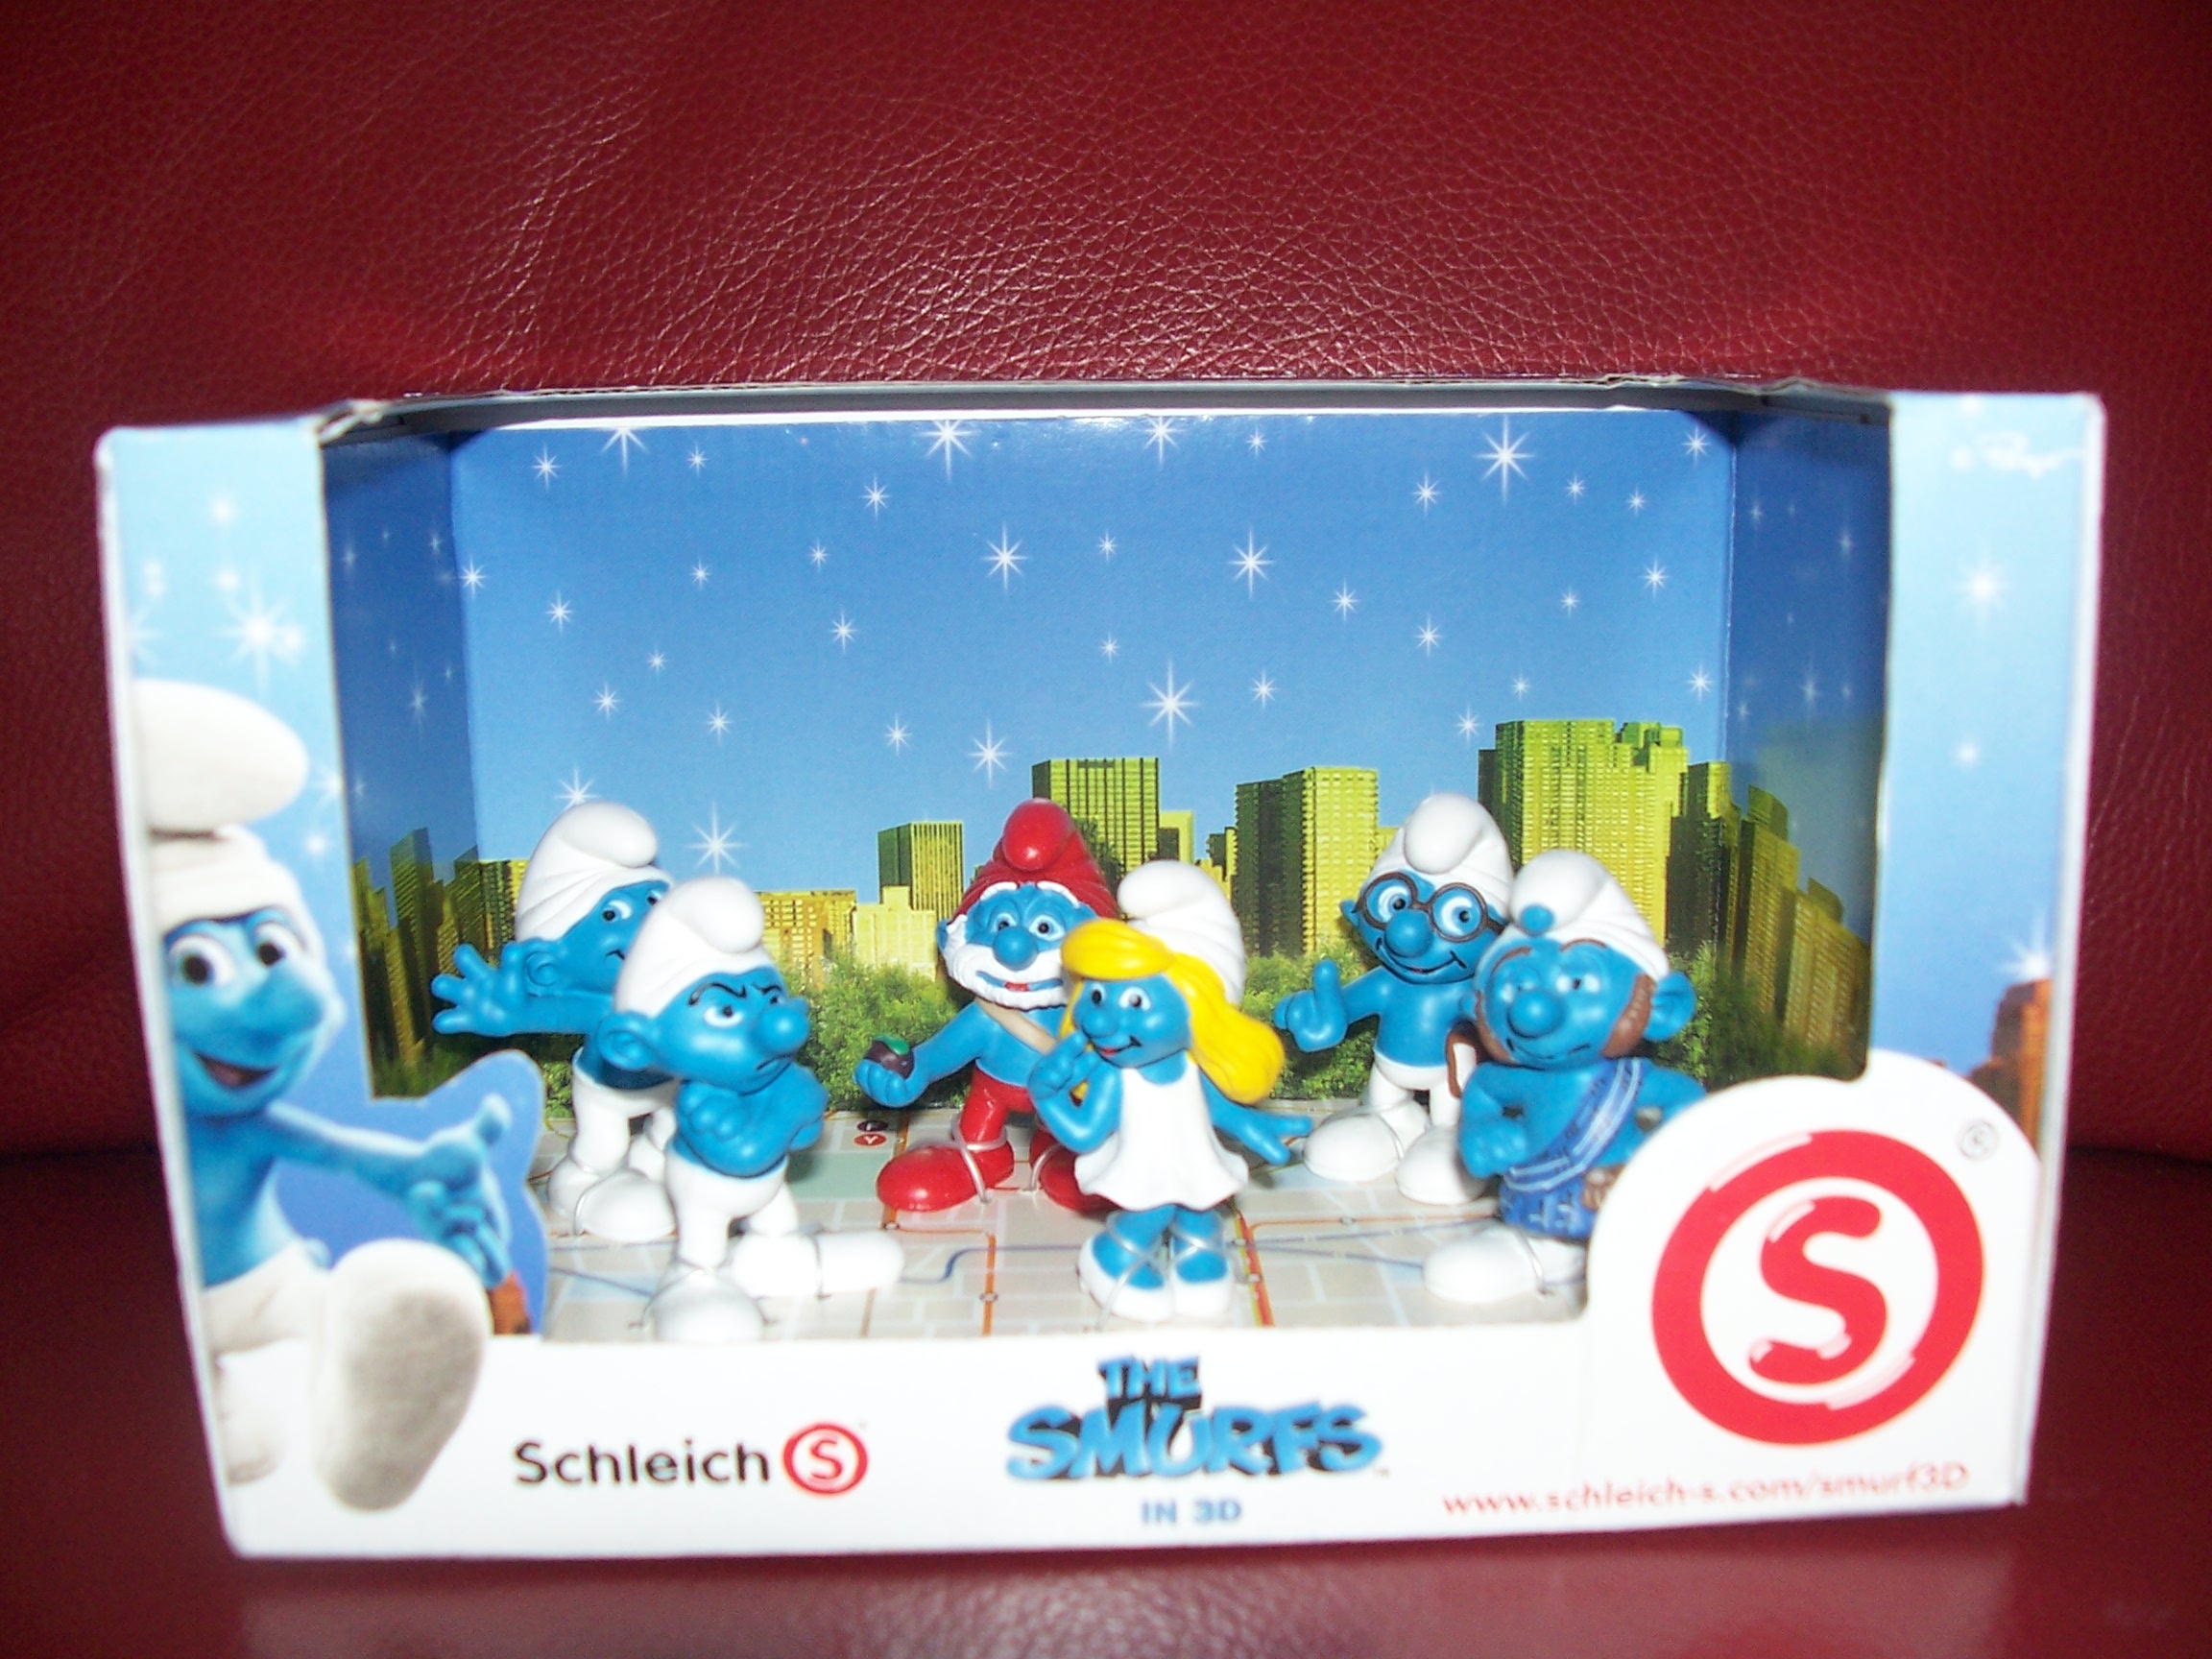 Smurf-toys-2.jpg